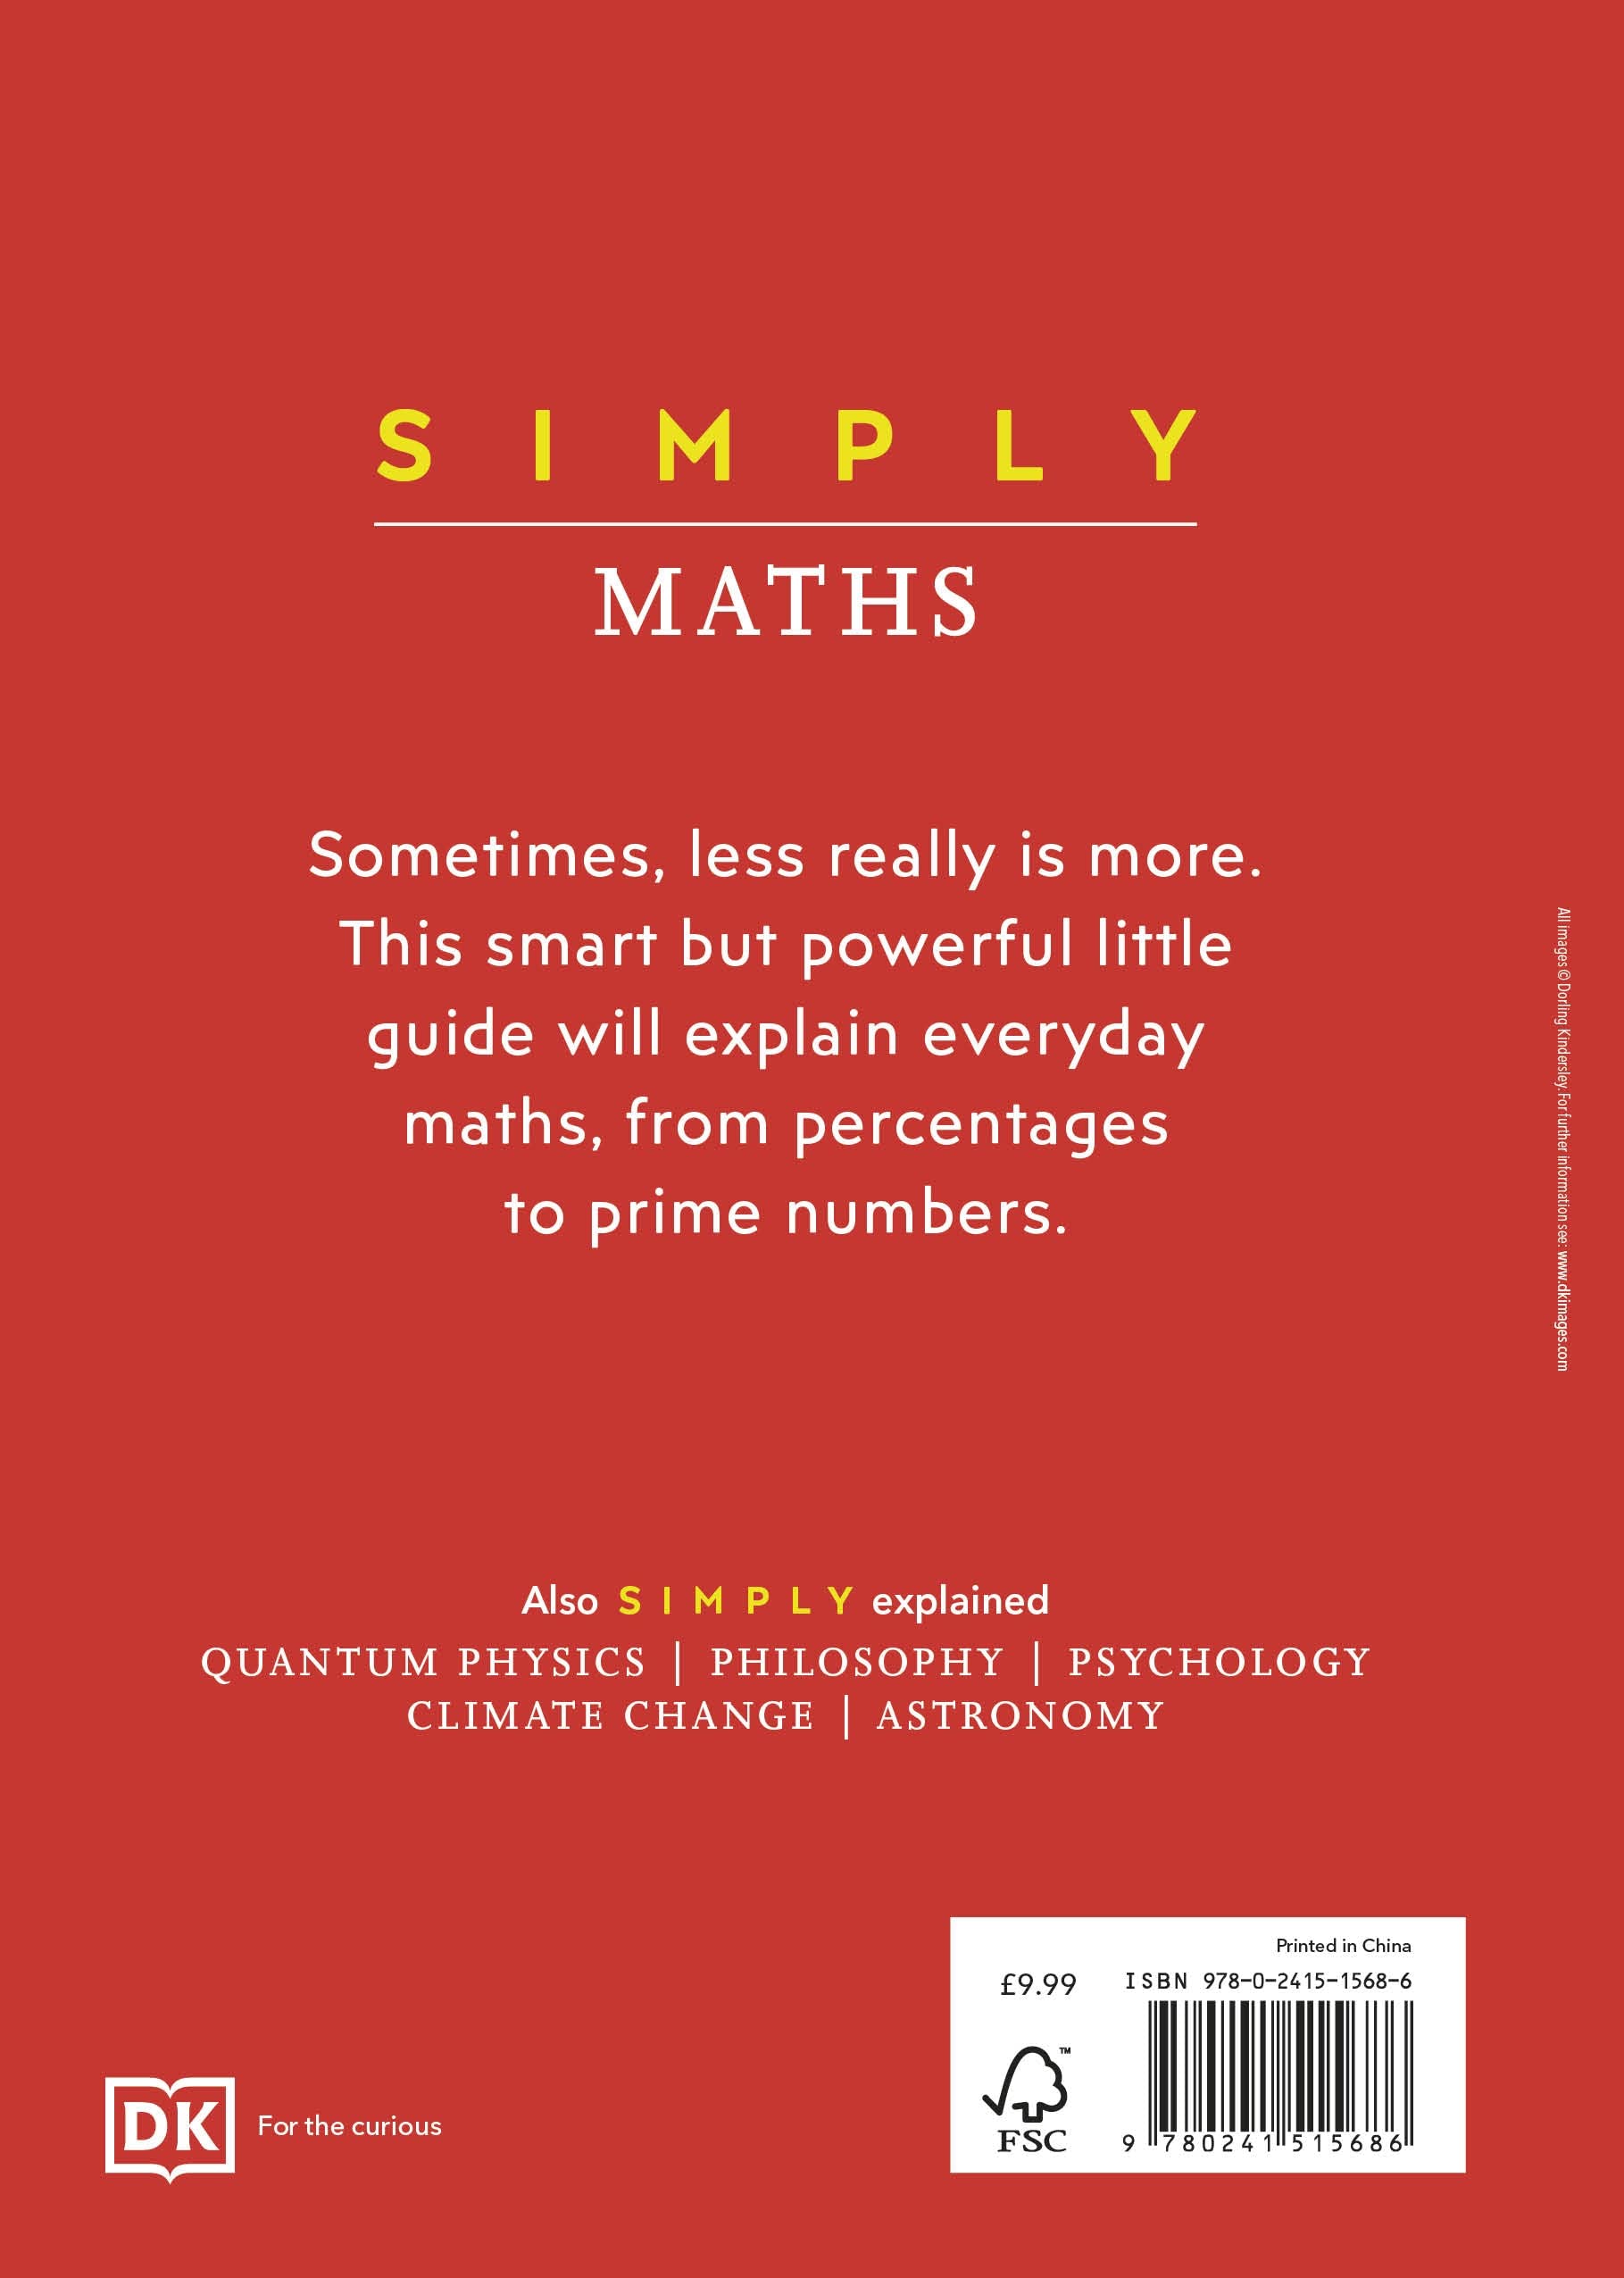 Simply Maths